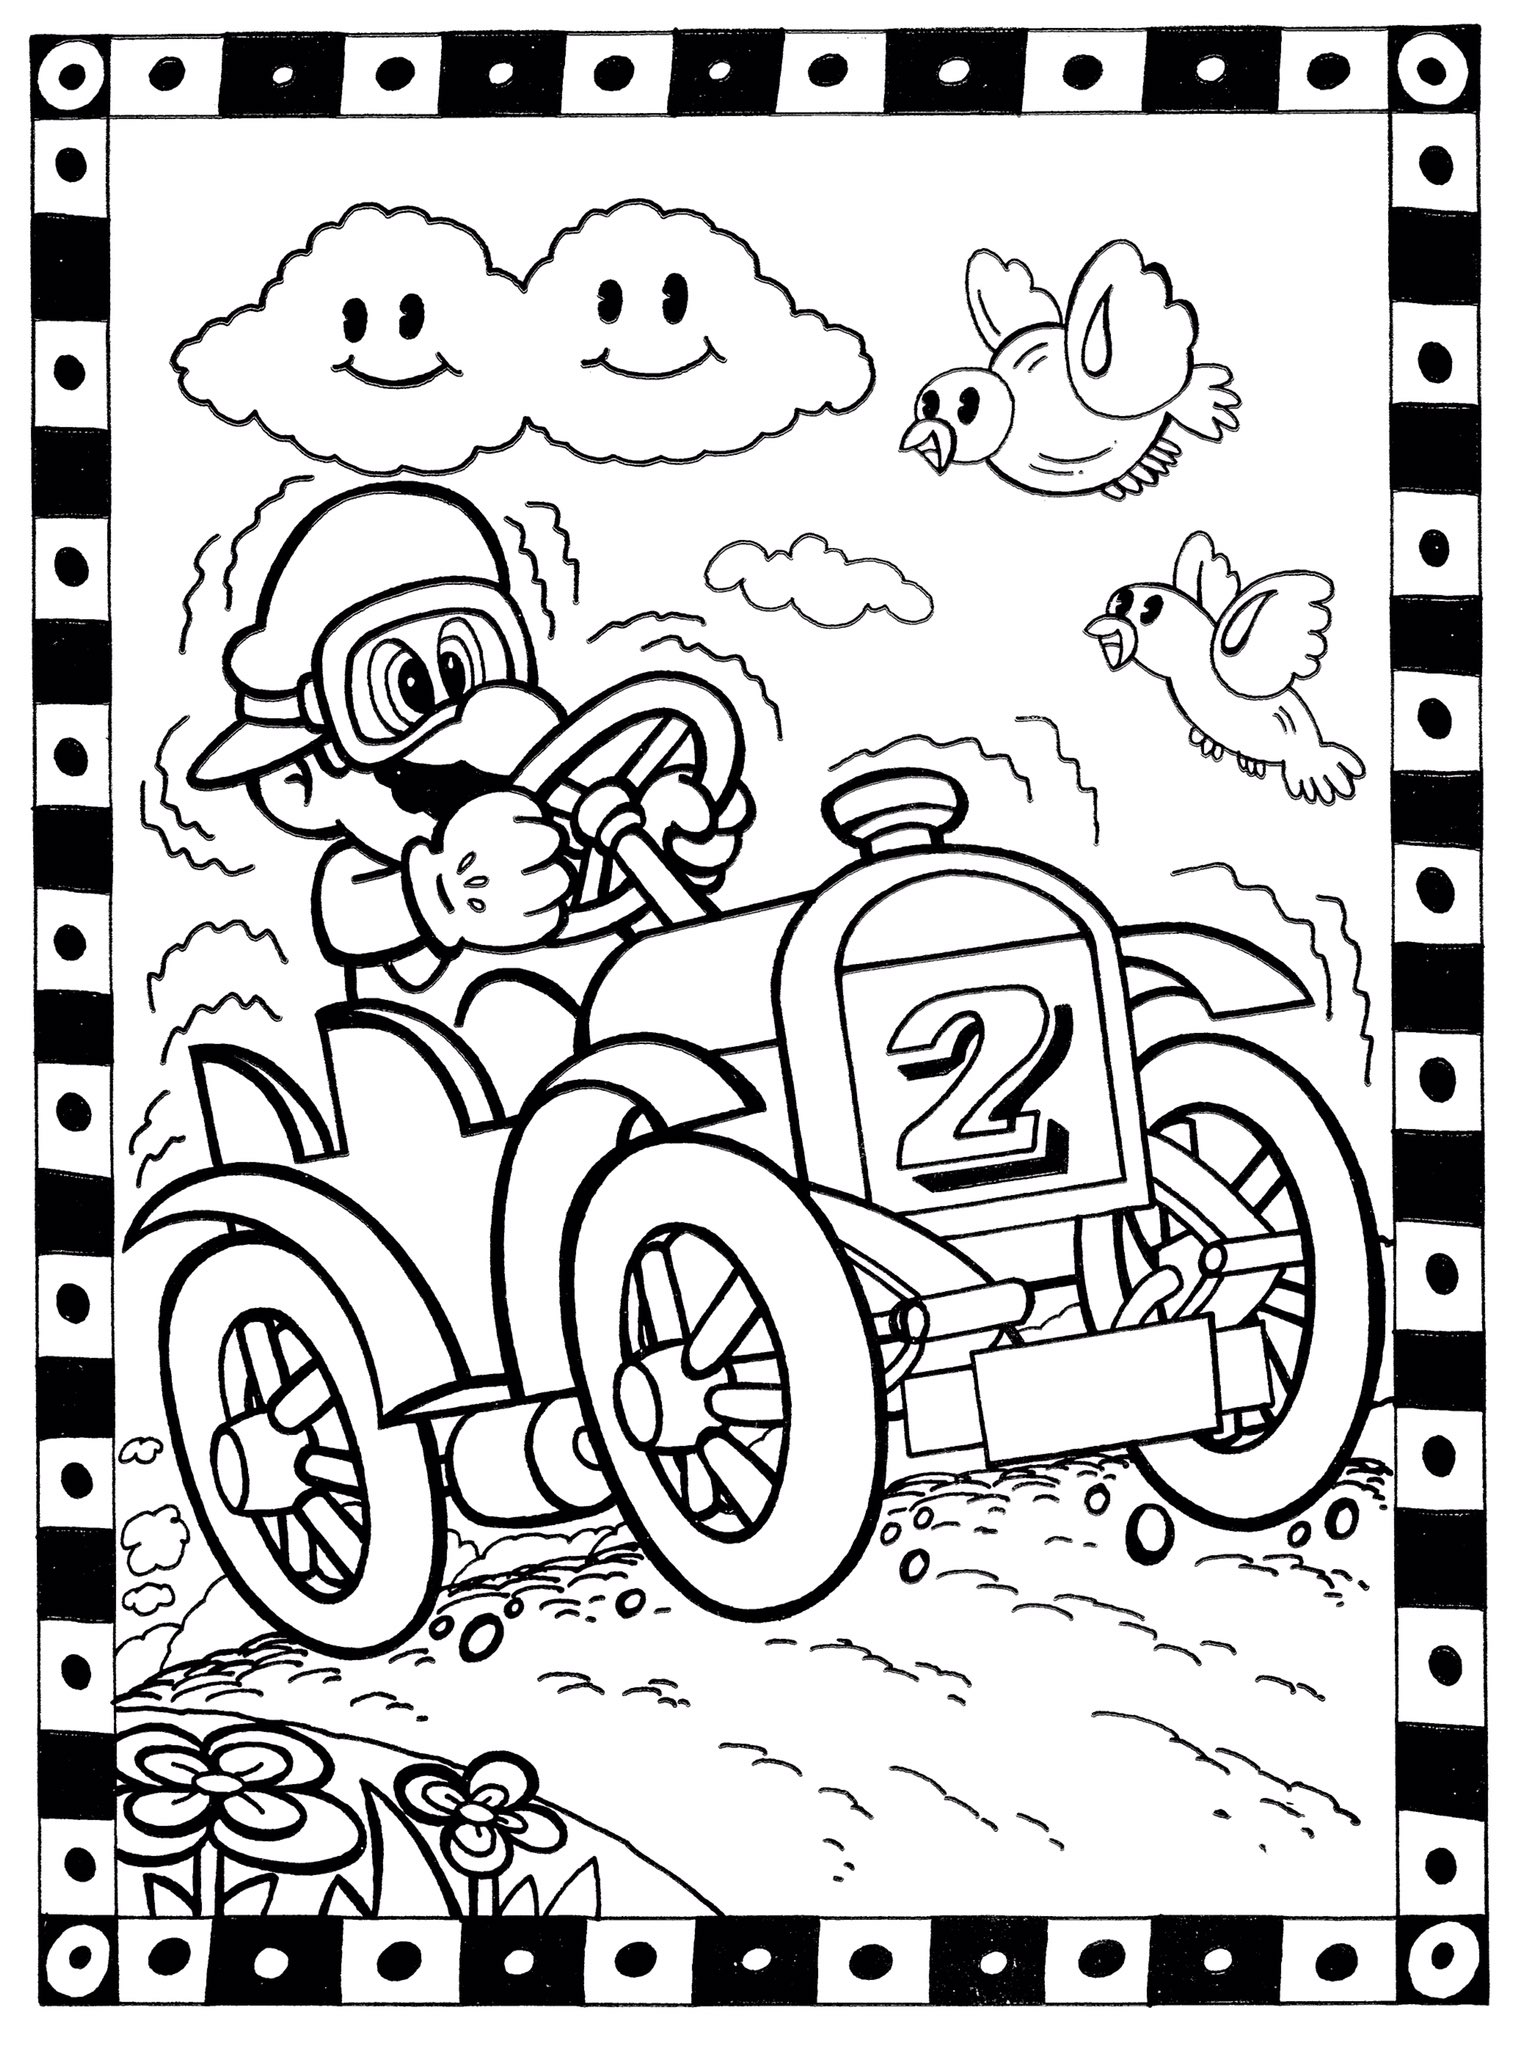 Super Mario Coloring Book from 1989 : r/nostalgia